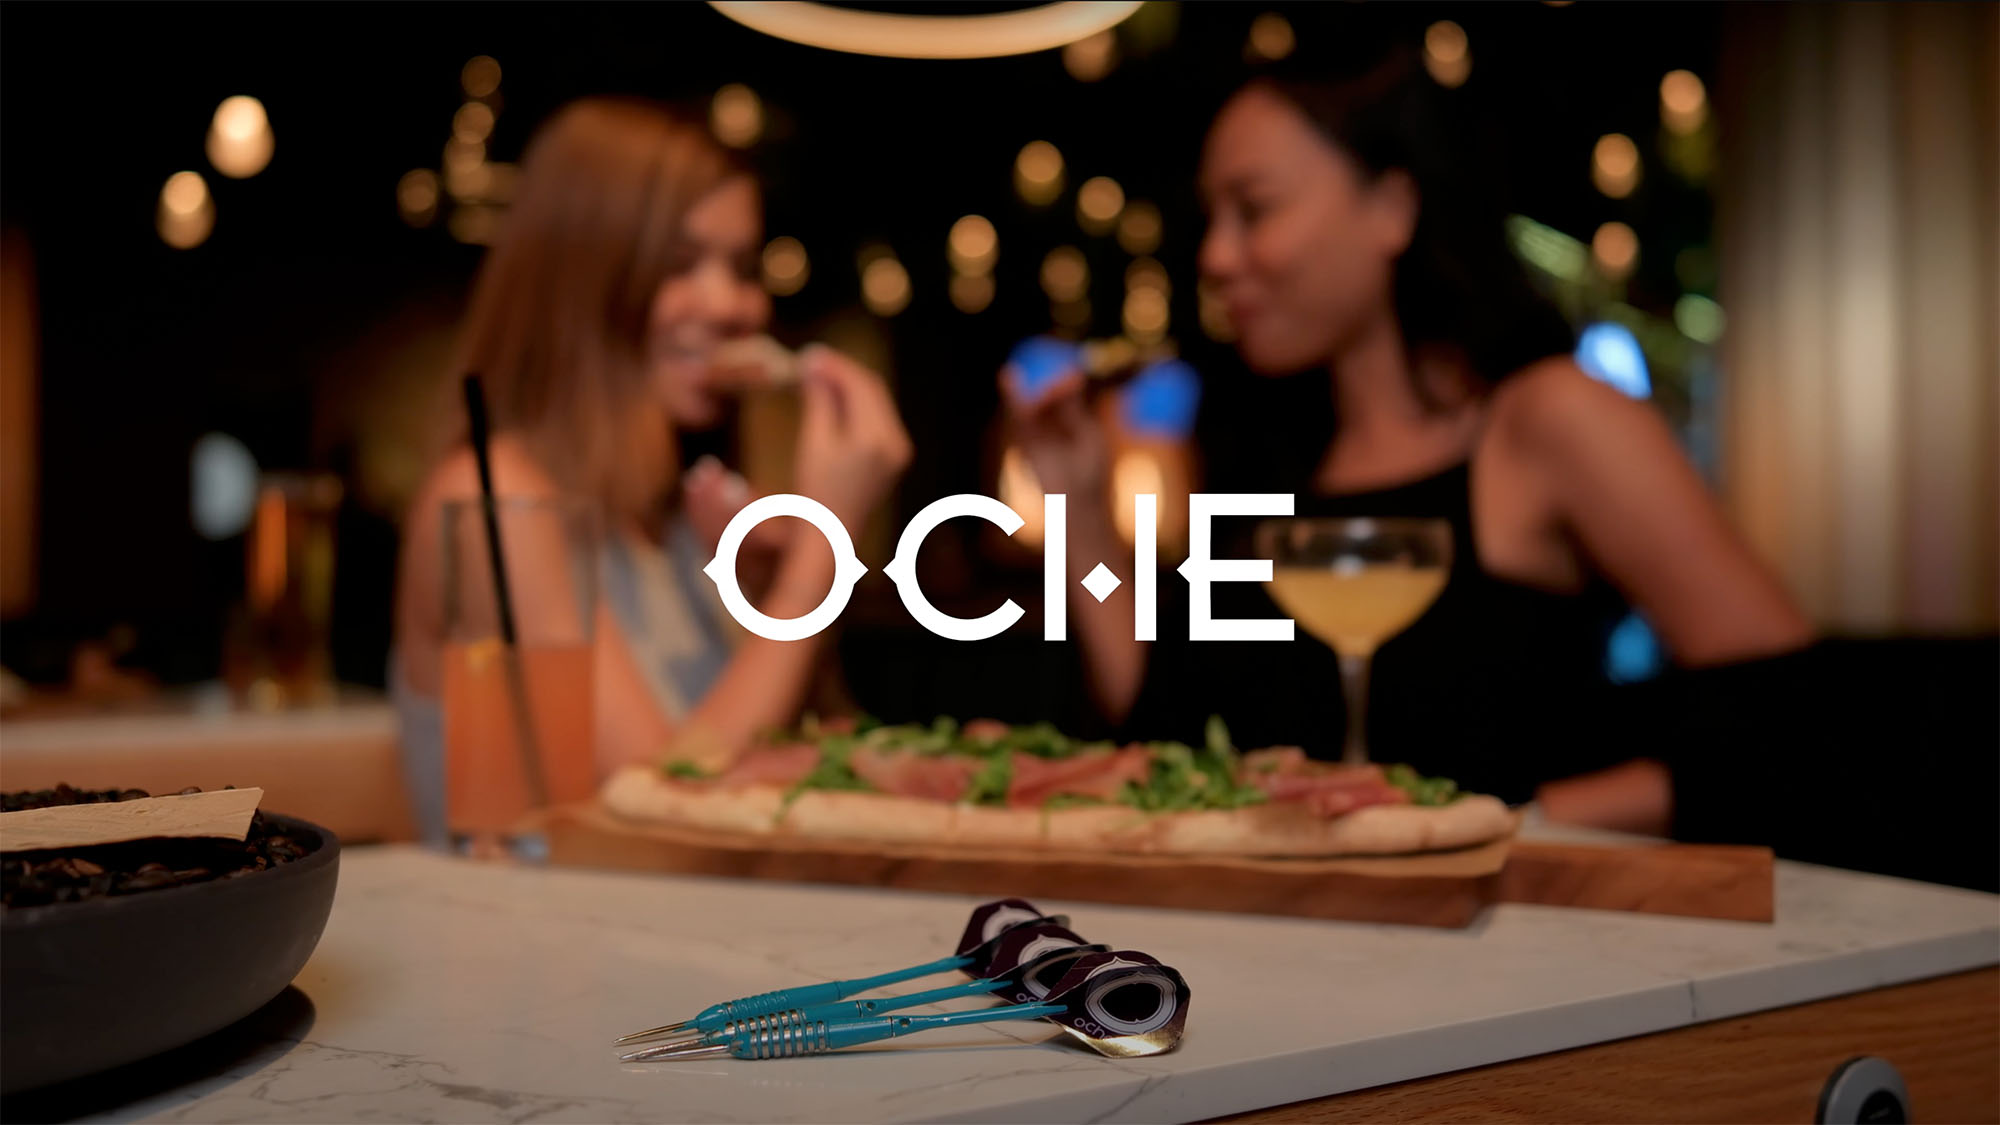 Restaurant Hotel video for Oche Restaurant in Singapour, Paris.